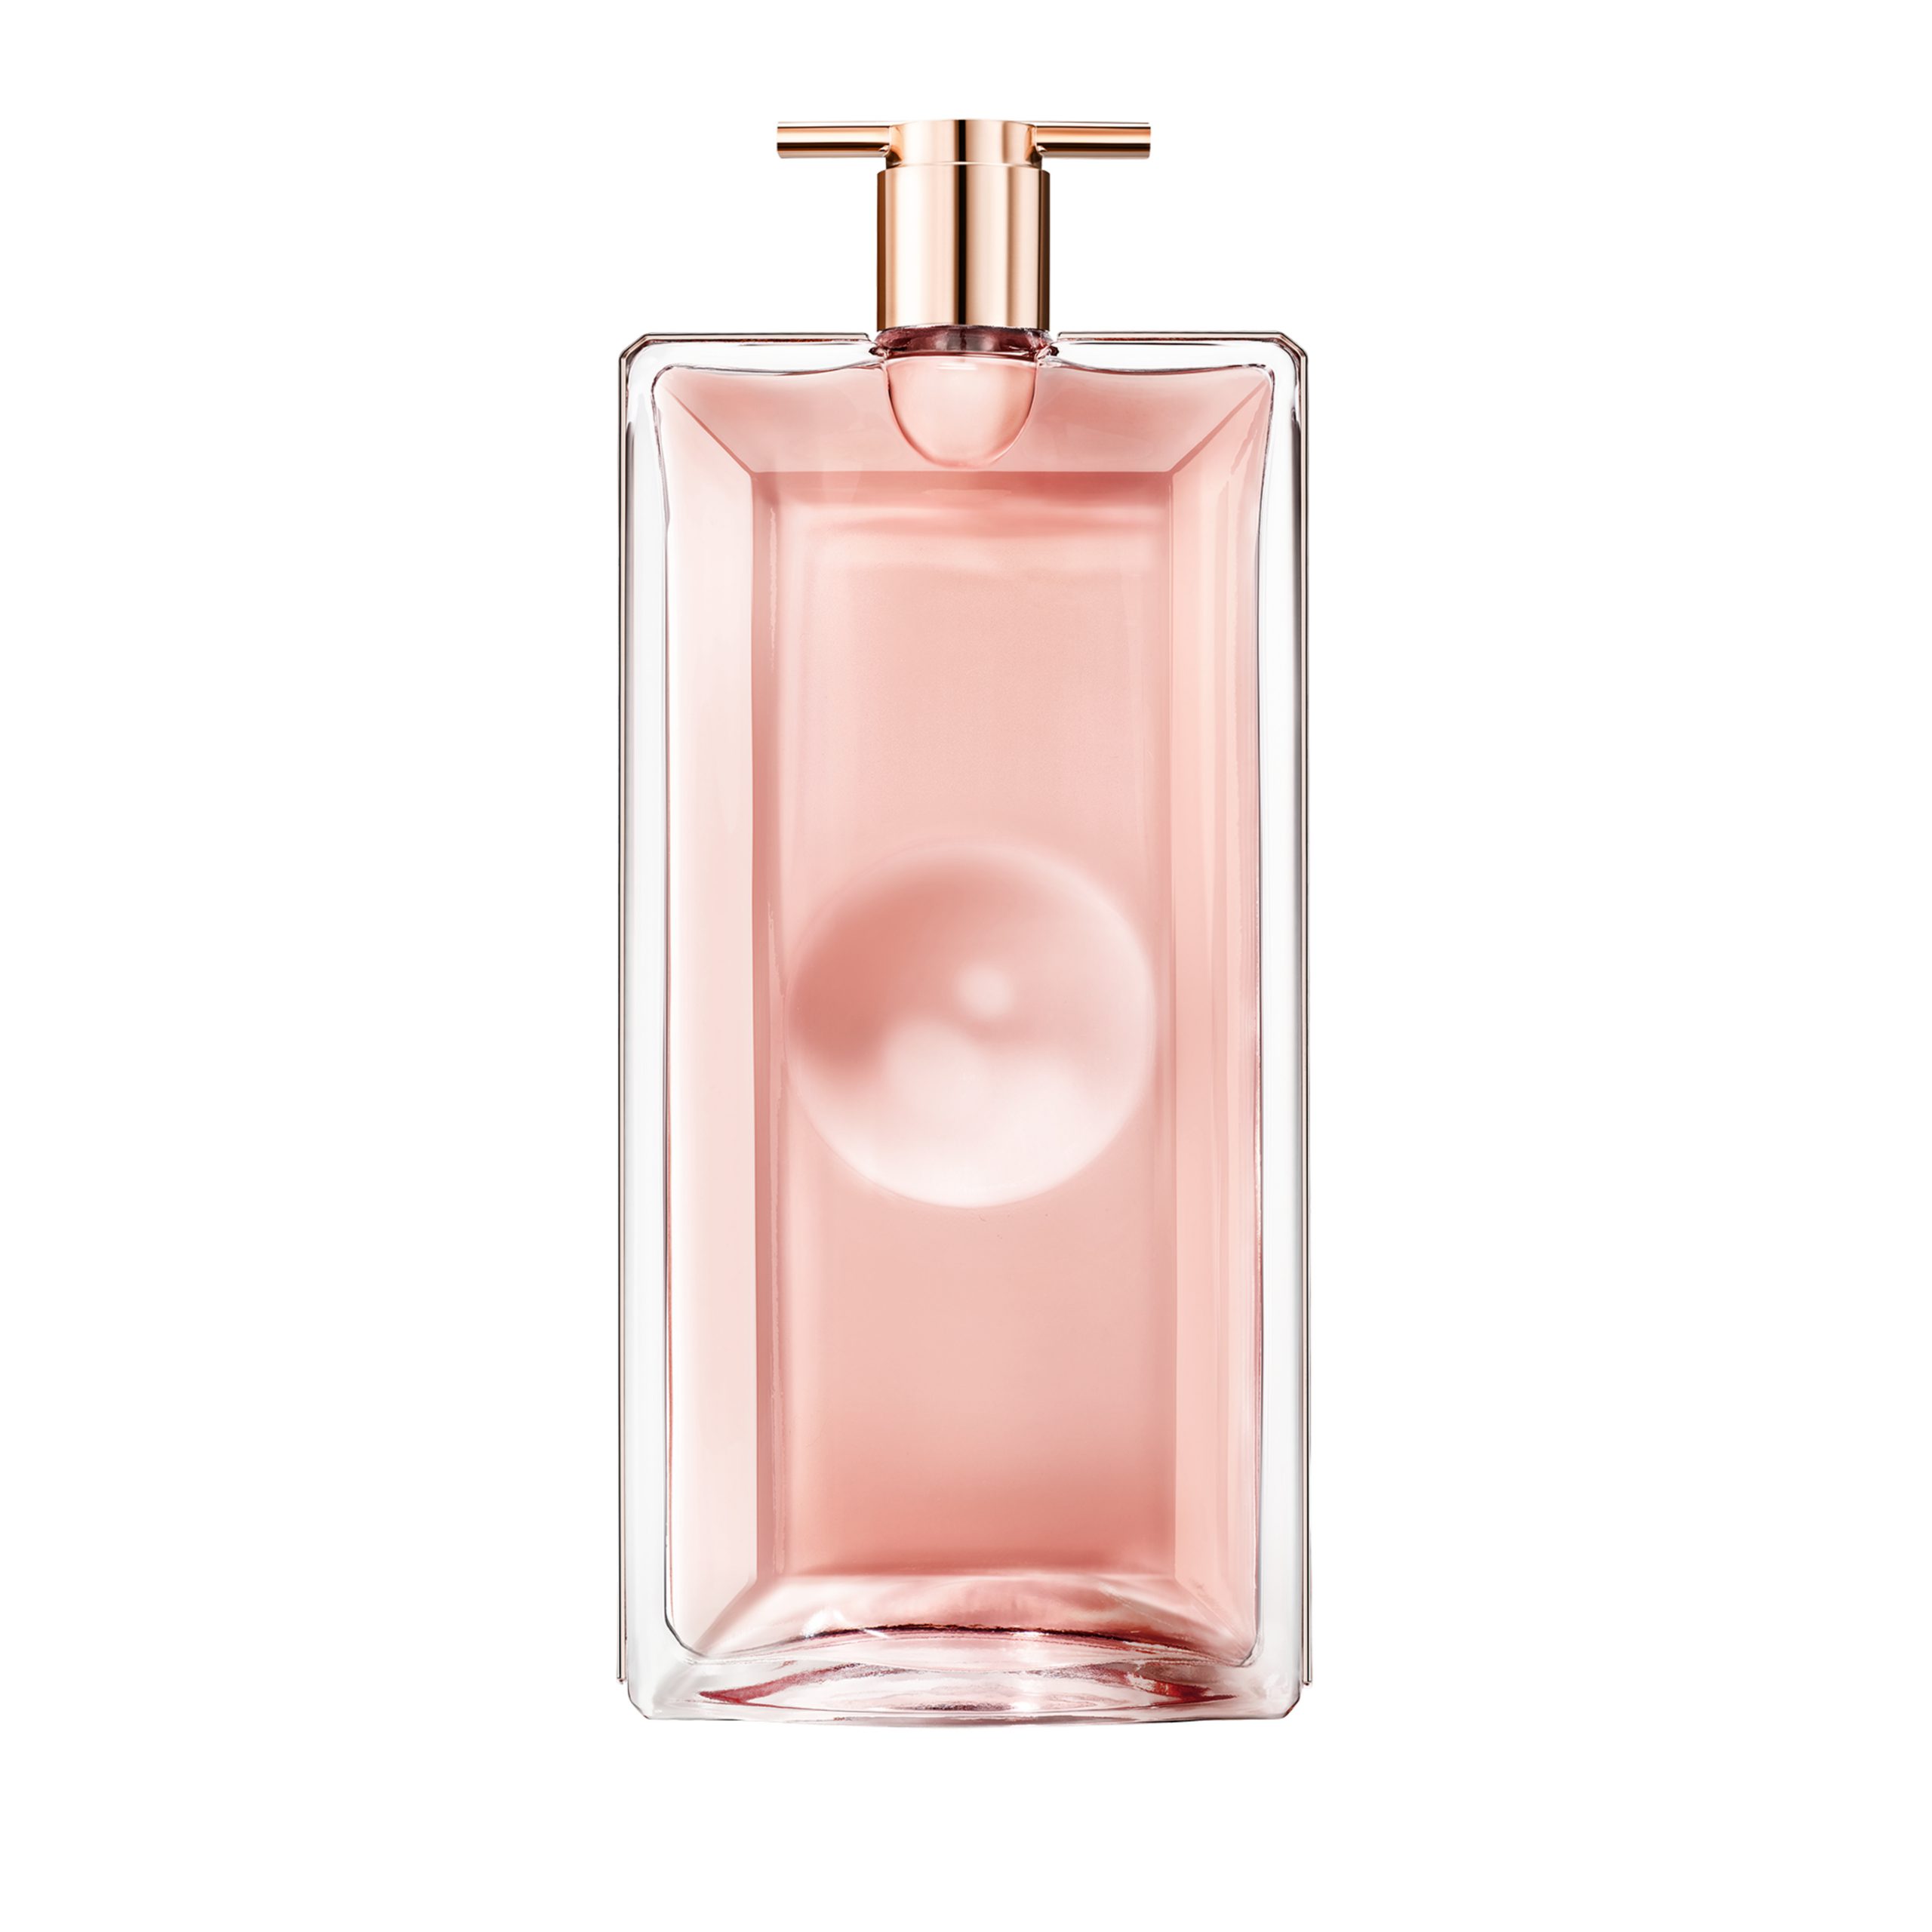 Lancome-Fragrance-Idole-eau-de-parfum-100ml-000-3614273069175-Closed-scaled